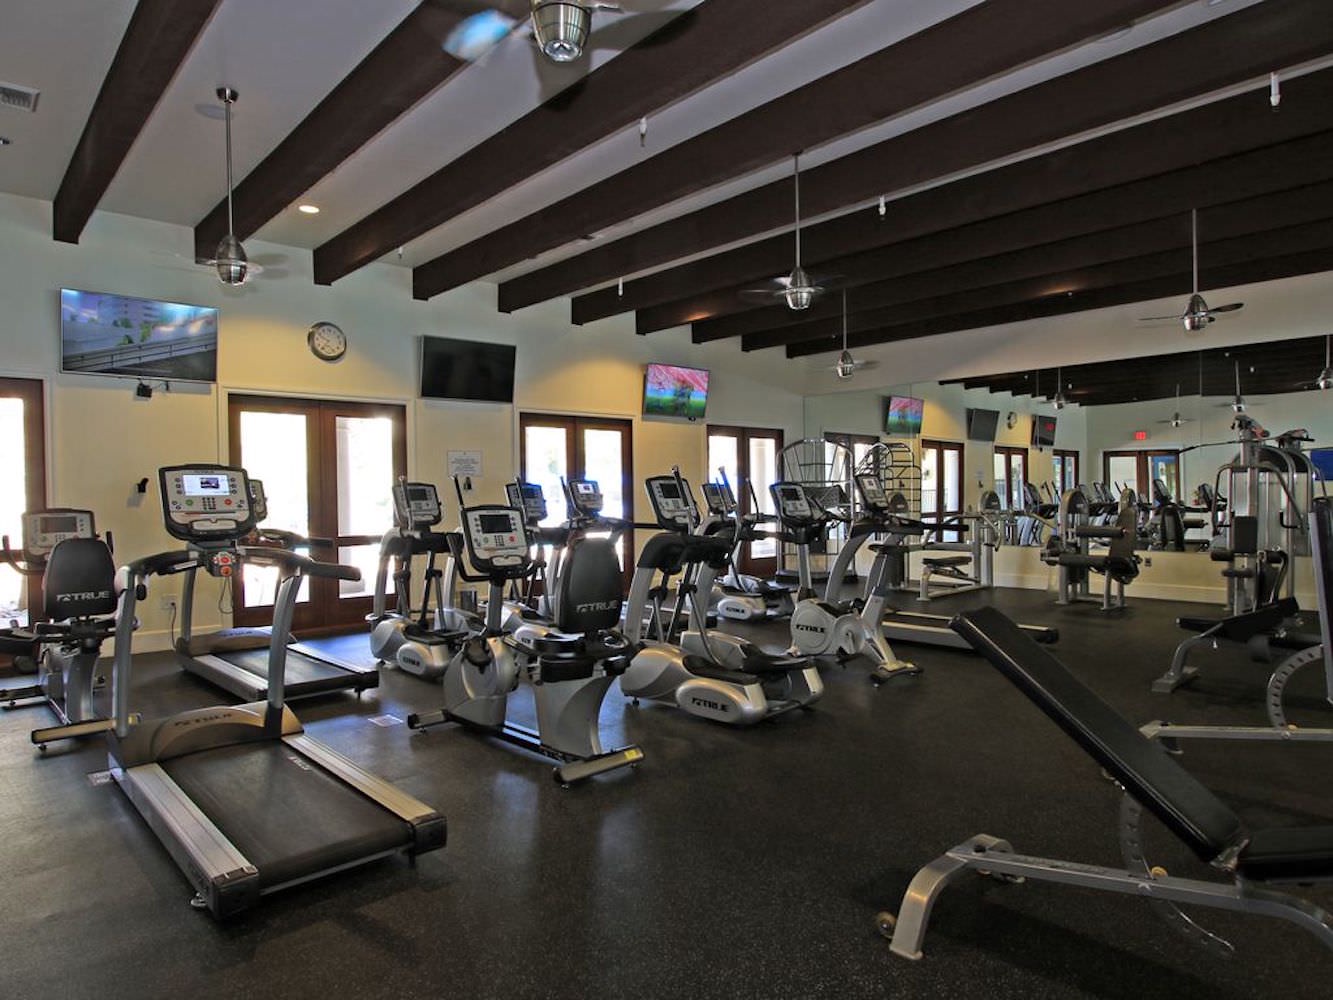 Community fitness center